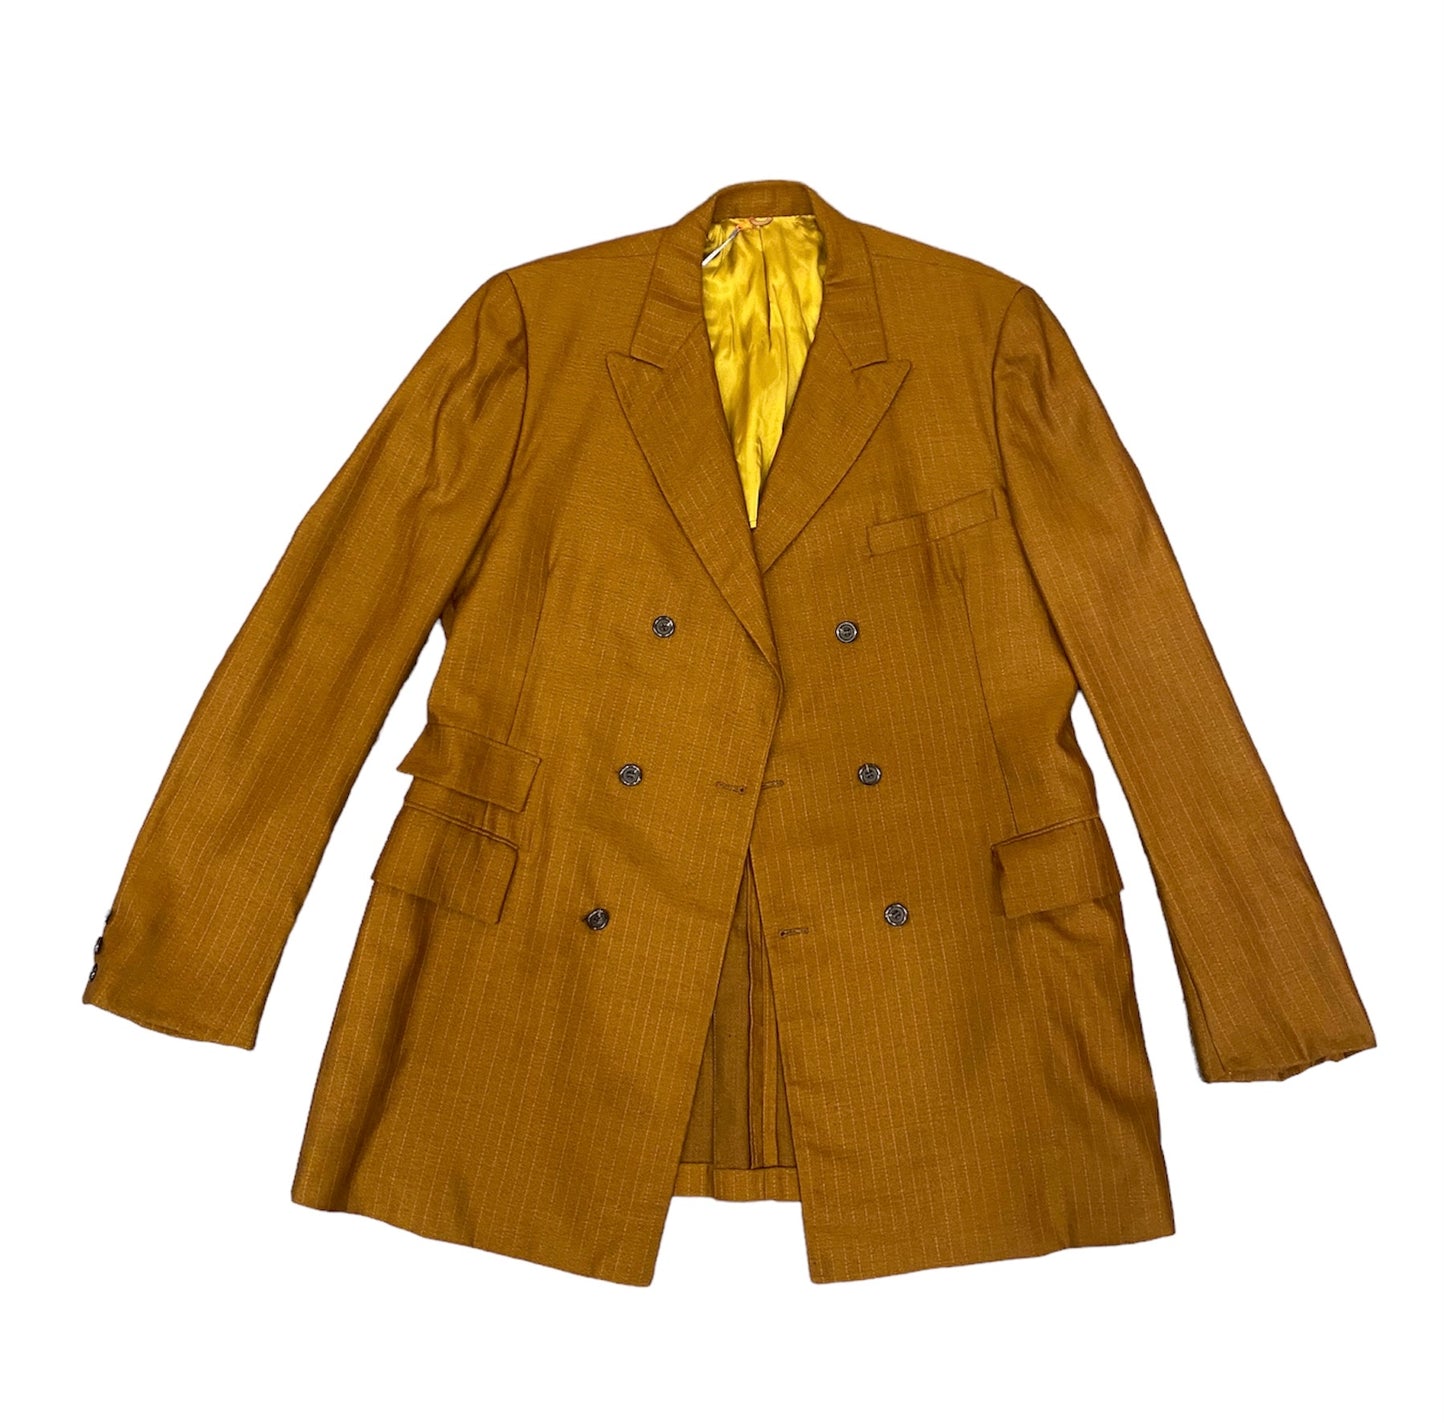 Vintage Tawny Double-Breasted Jacket